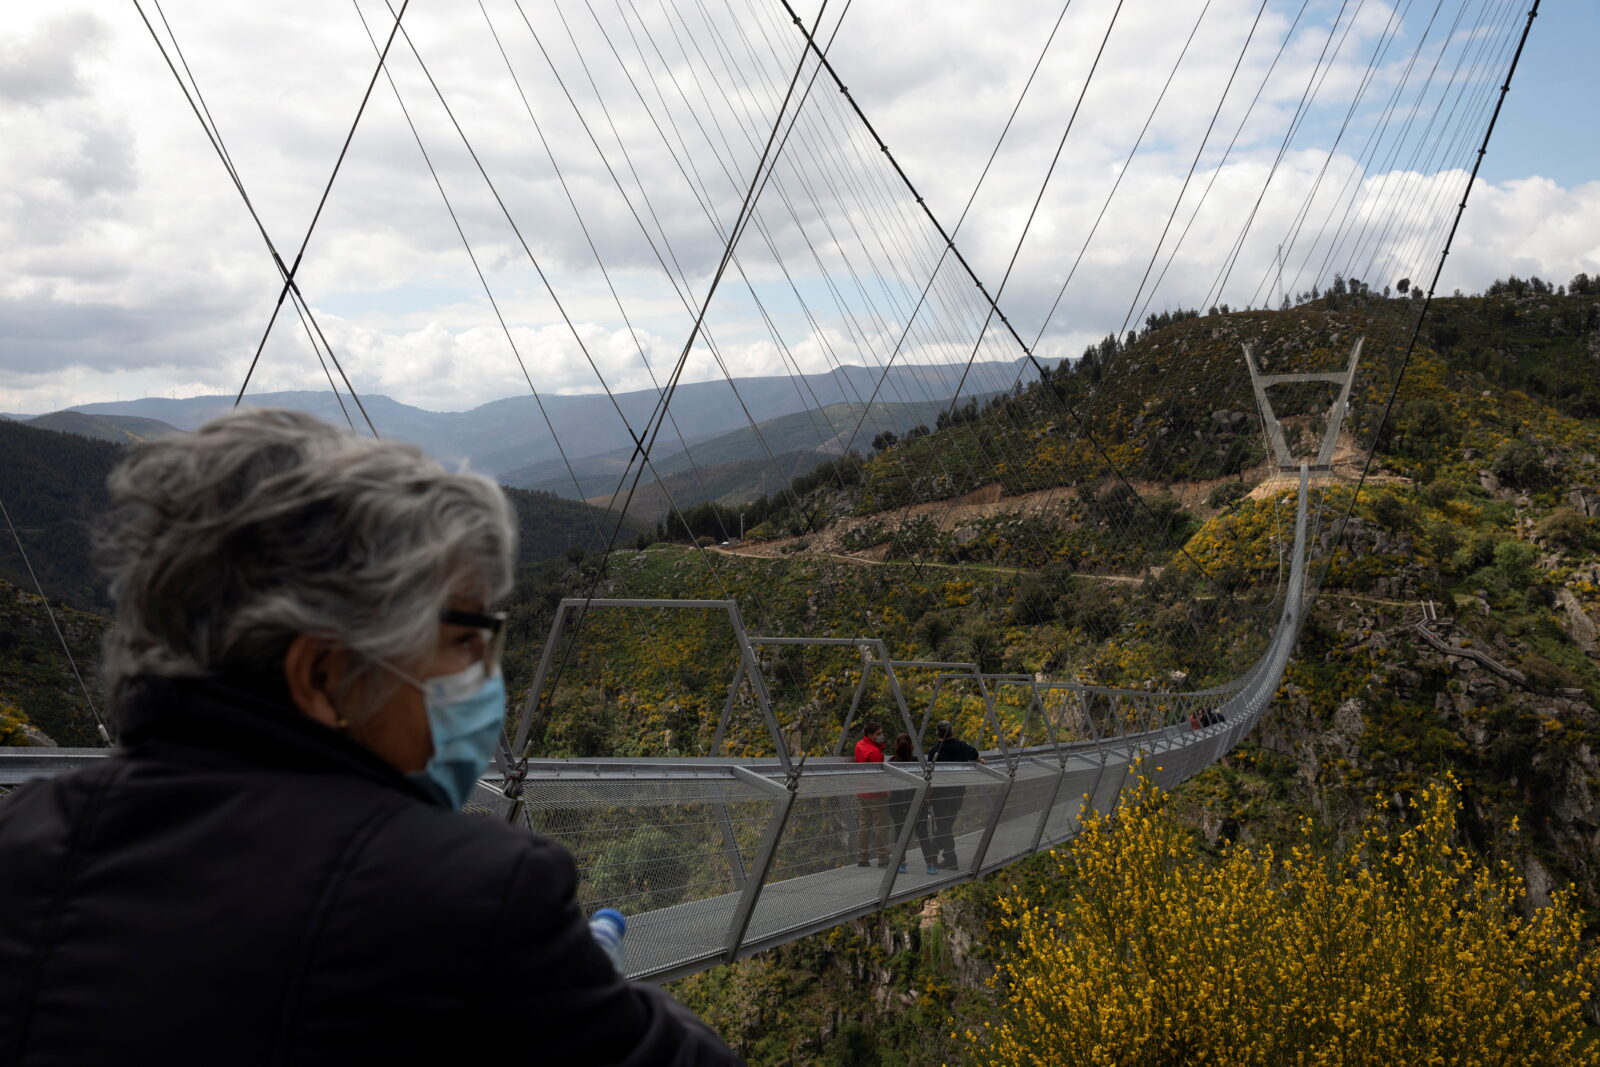 People walk on the world's longest pedestrian suspension bridge '516 Arouca', in Arouca